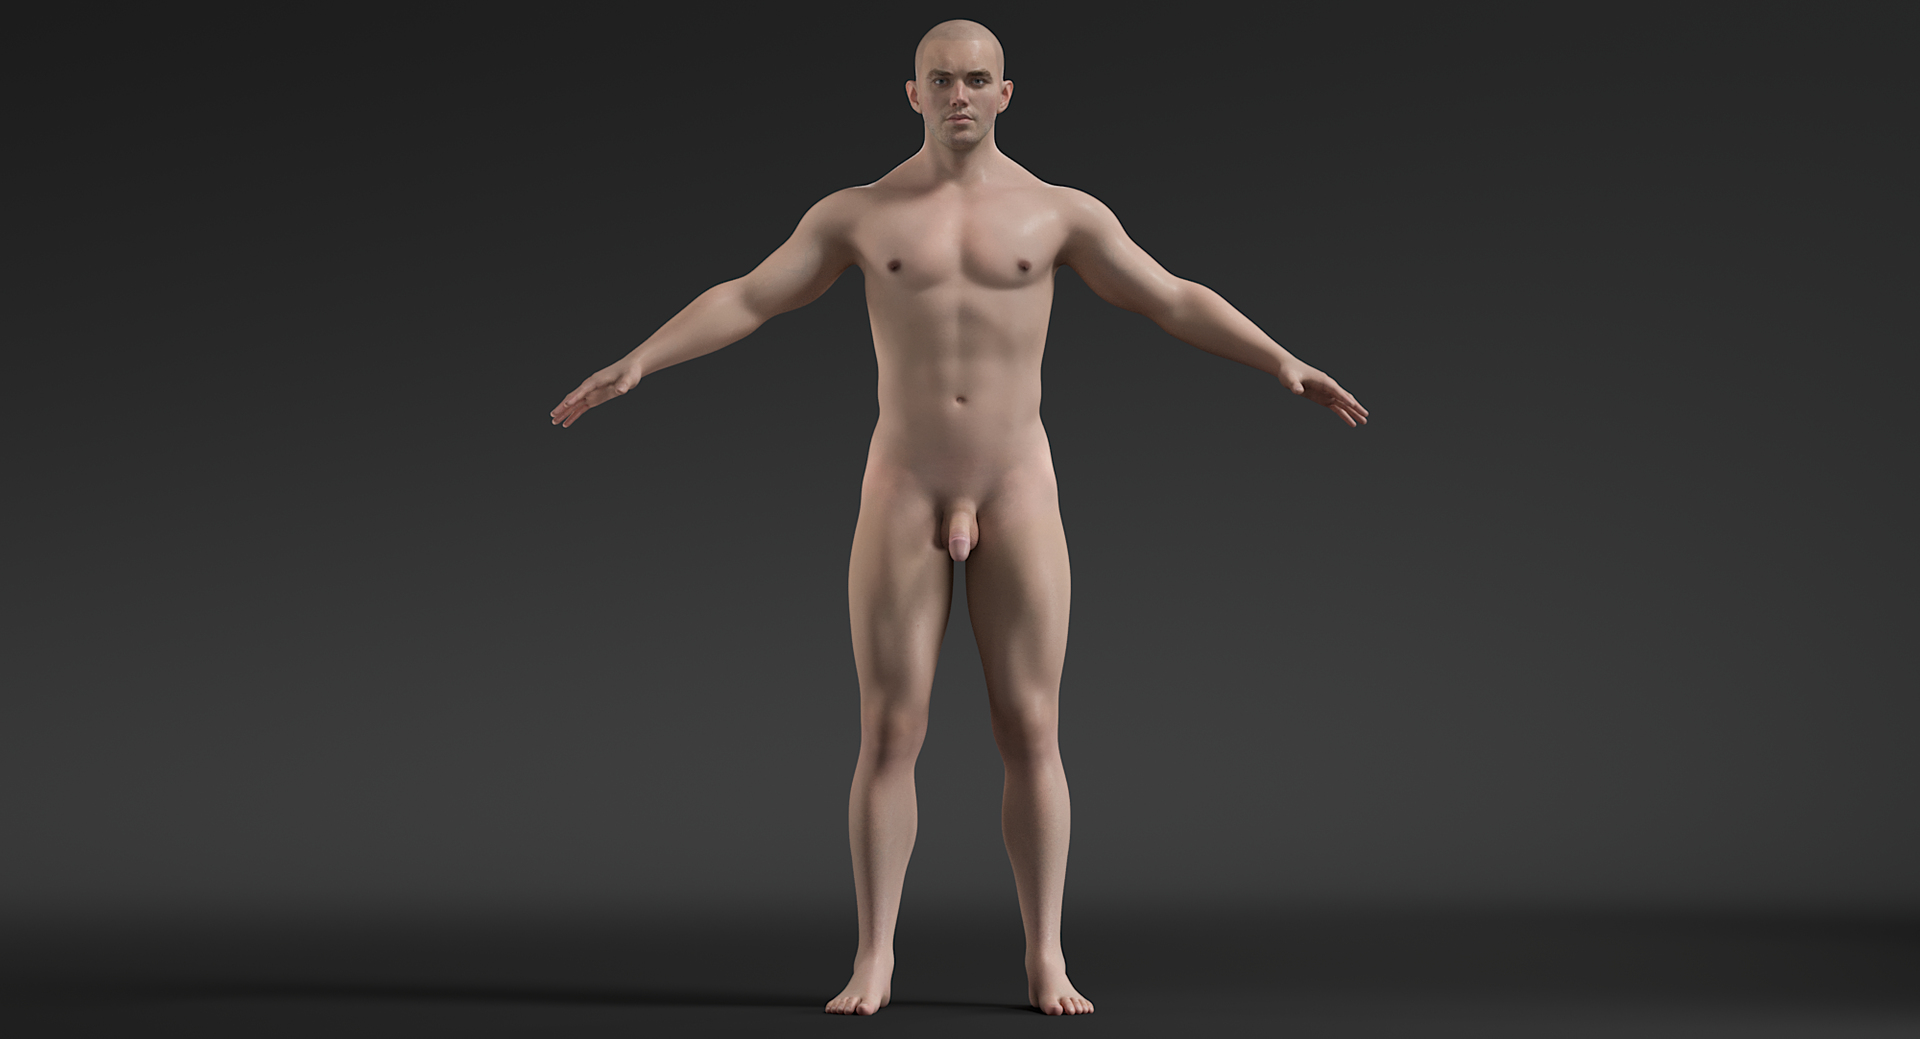 clayton jaynes share naked men models photos